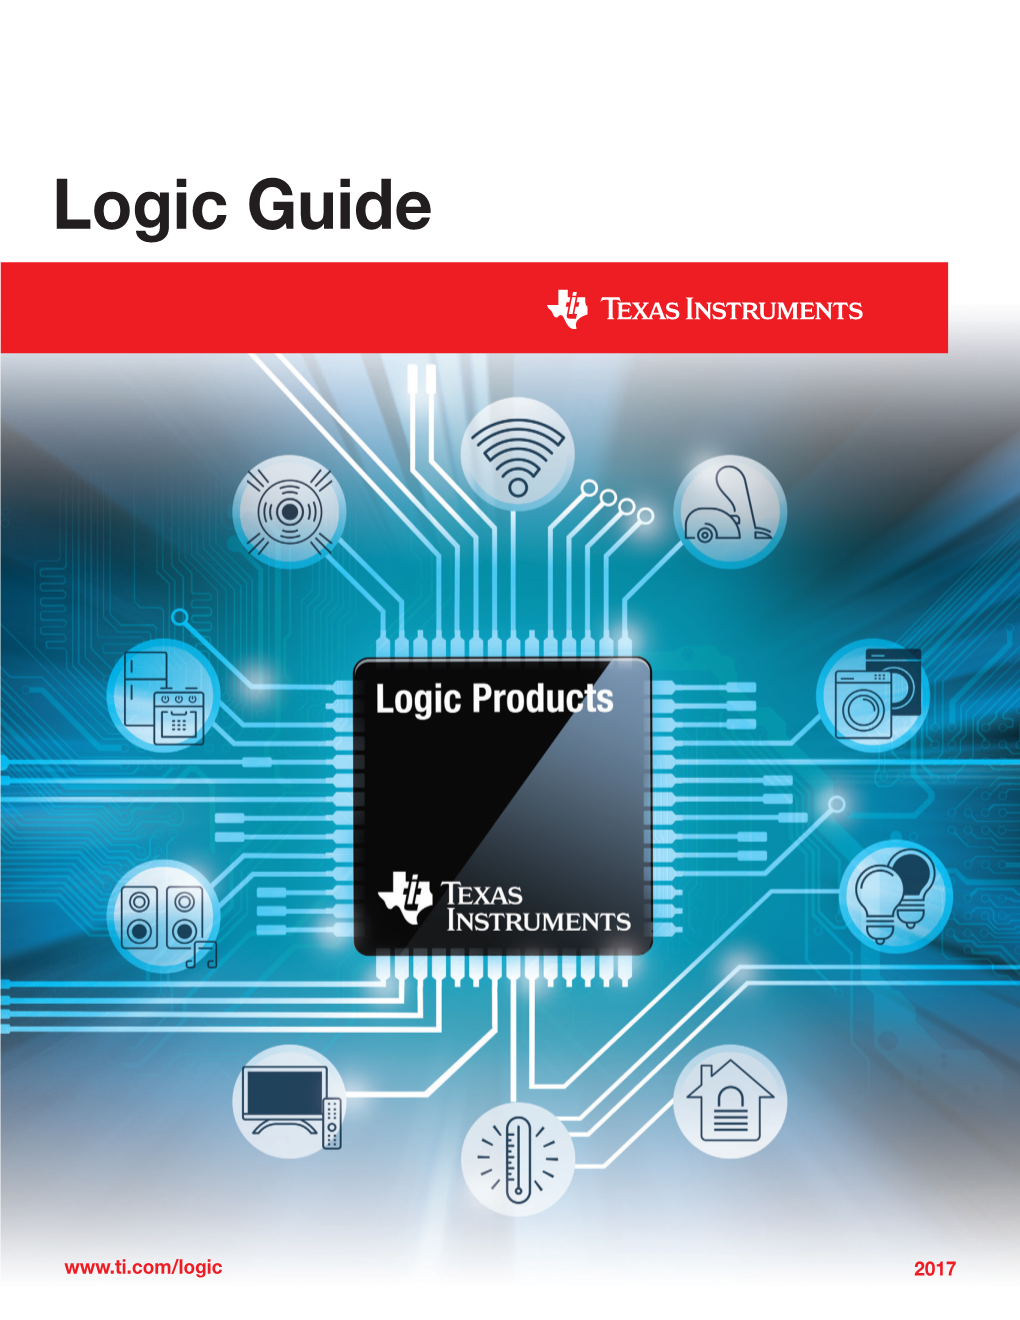 Logic Guide (Rev